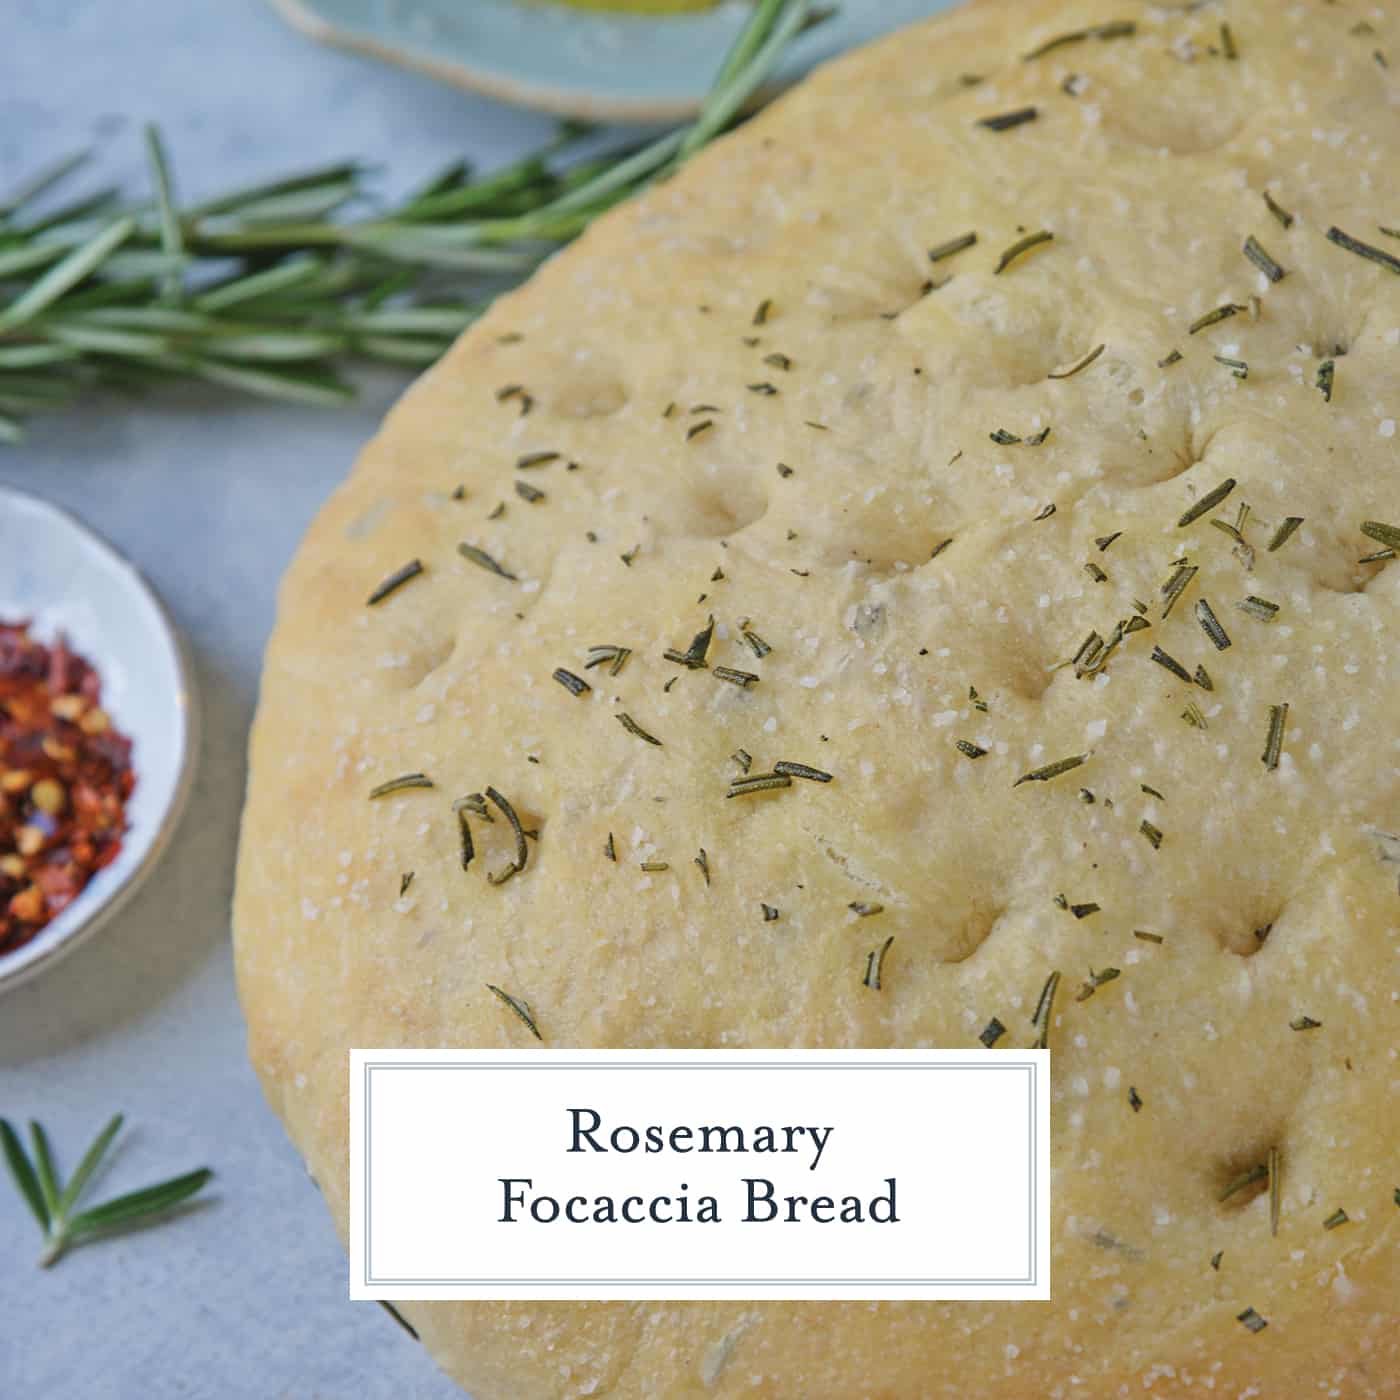 https://www.savoryexperiments.com/wp-content/uploads/2013/01/rosemary-focaccia-bread-FB.jpg